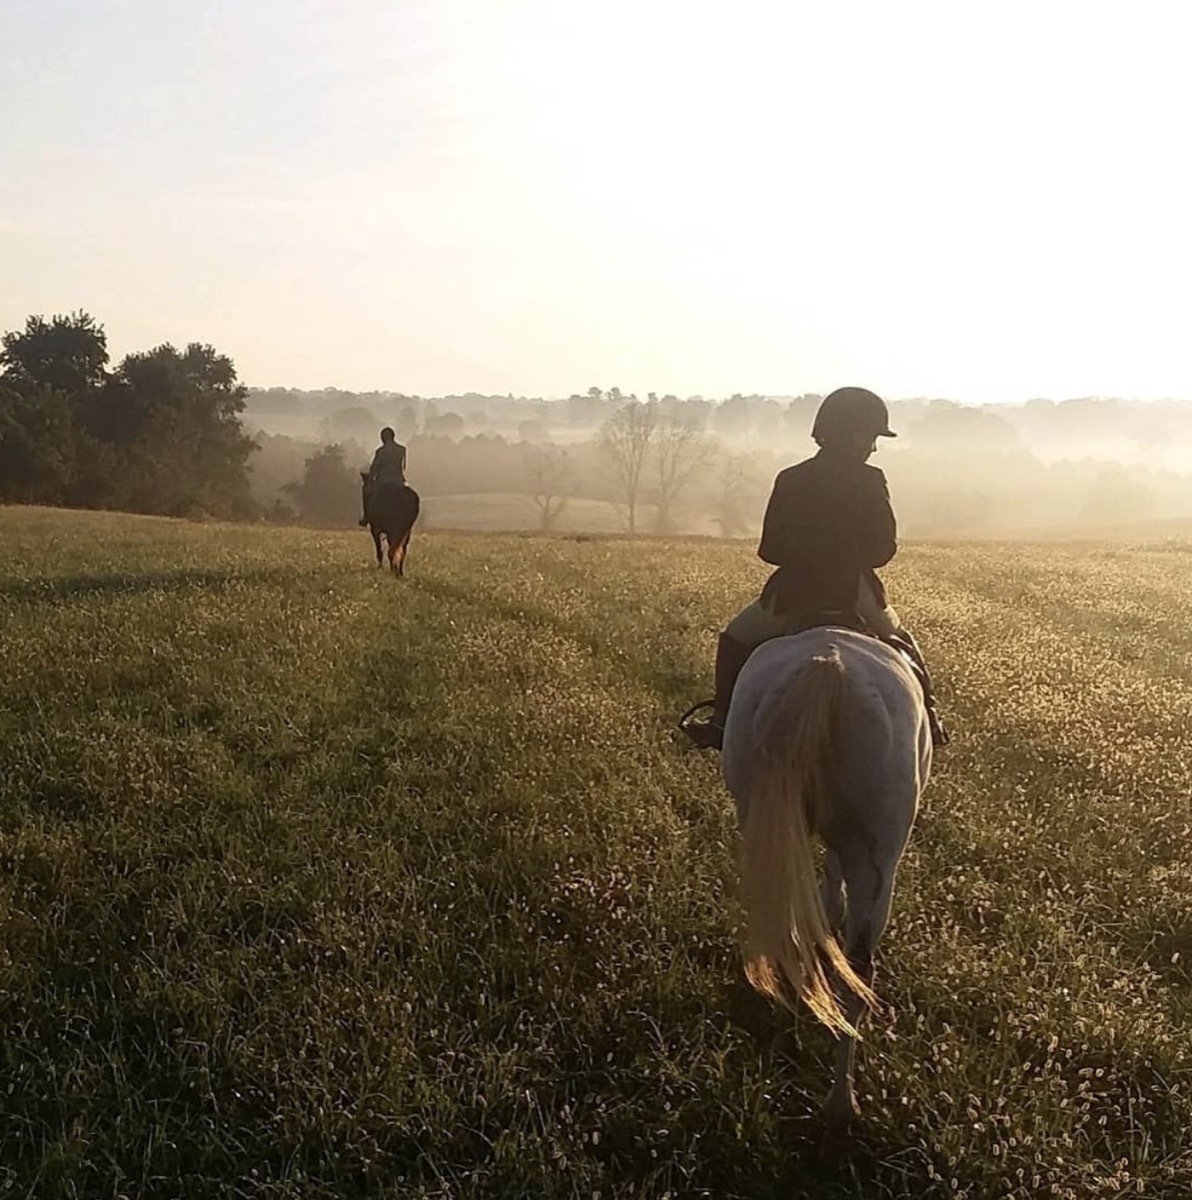 mackenzie rosman on horseback riding across a field